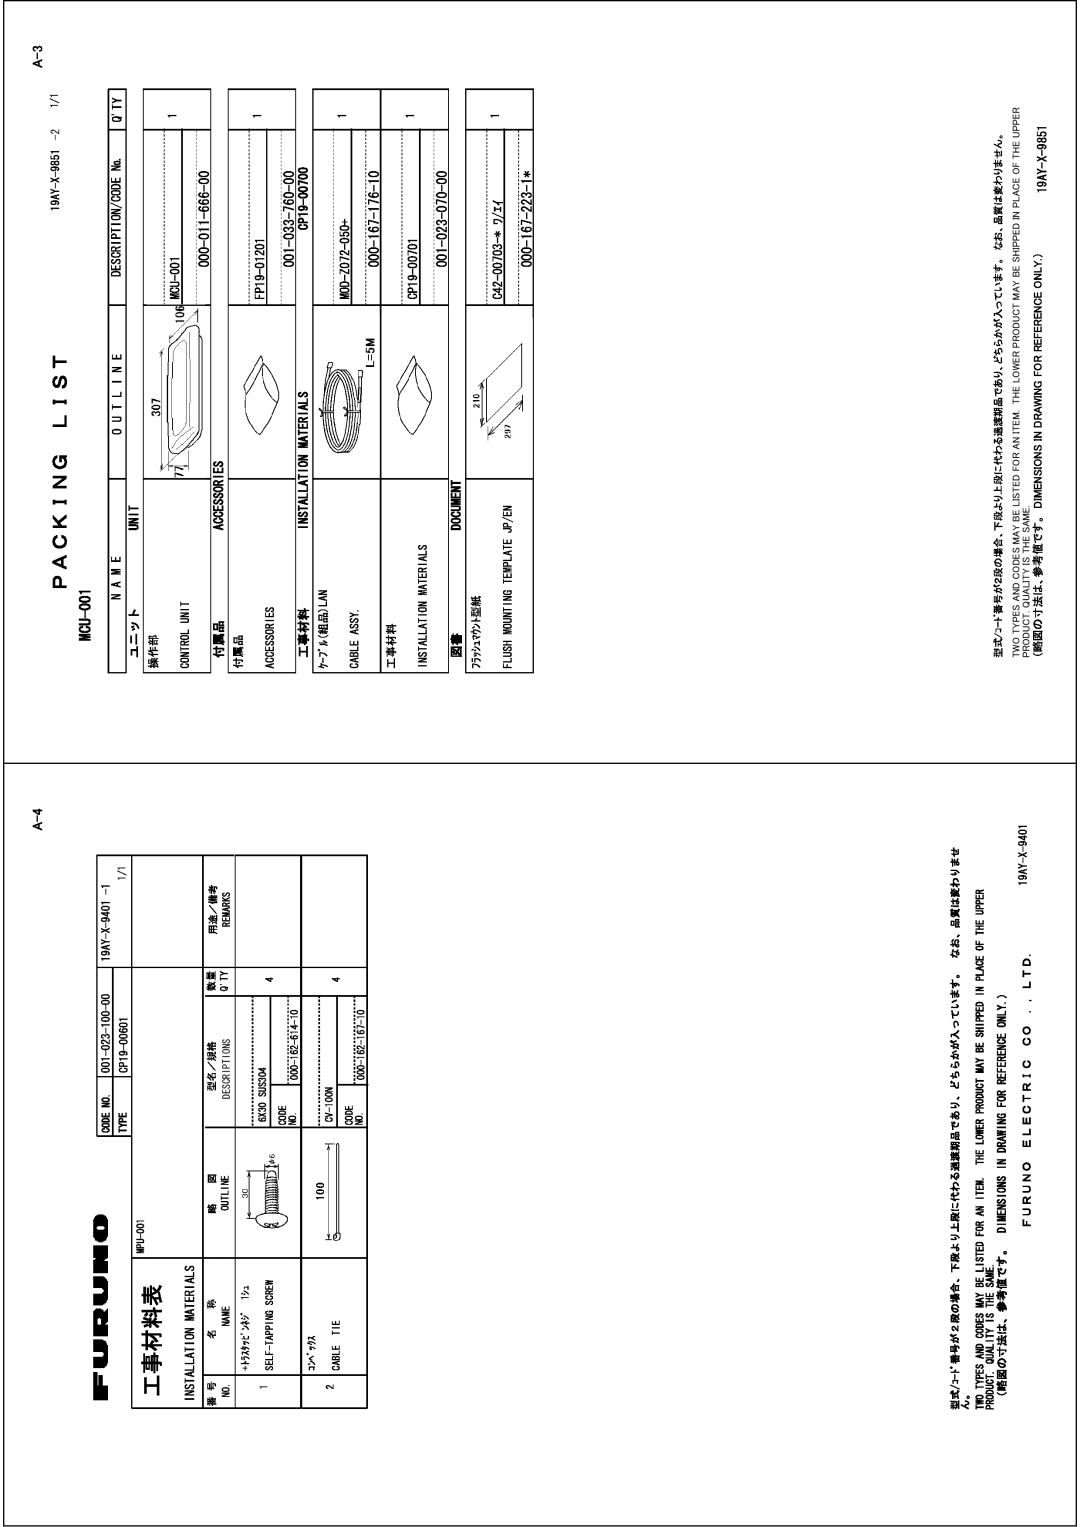 Furuno MFD8/12/BB manual 7, 70+6, +056#, #6+10/#64+#.5, 2, 1%7/06 